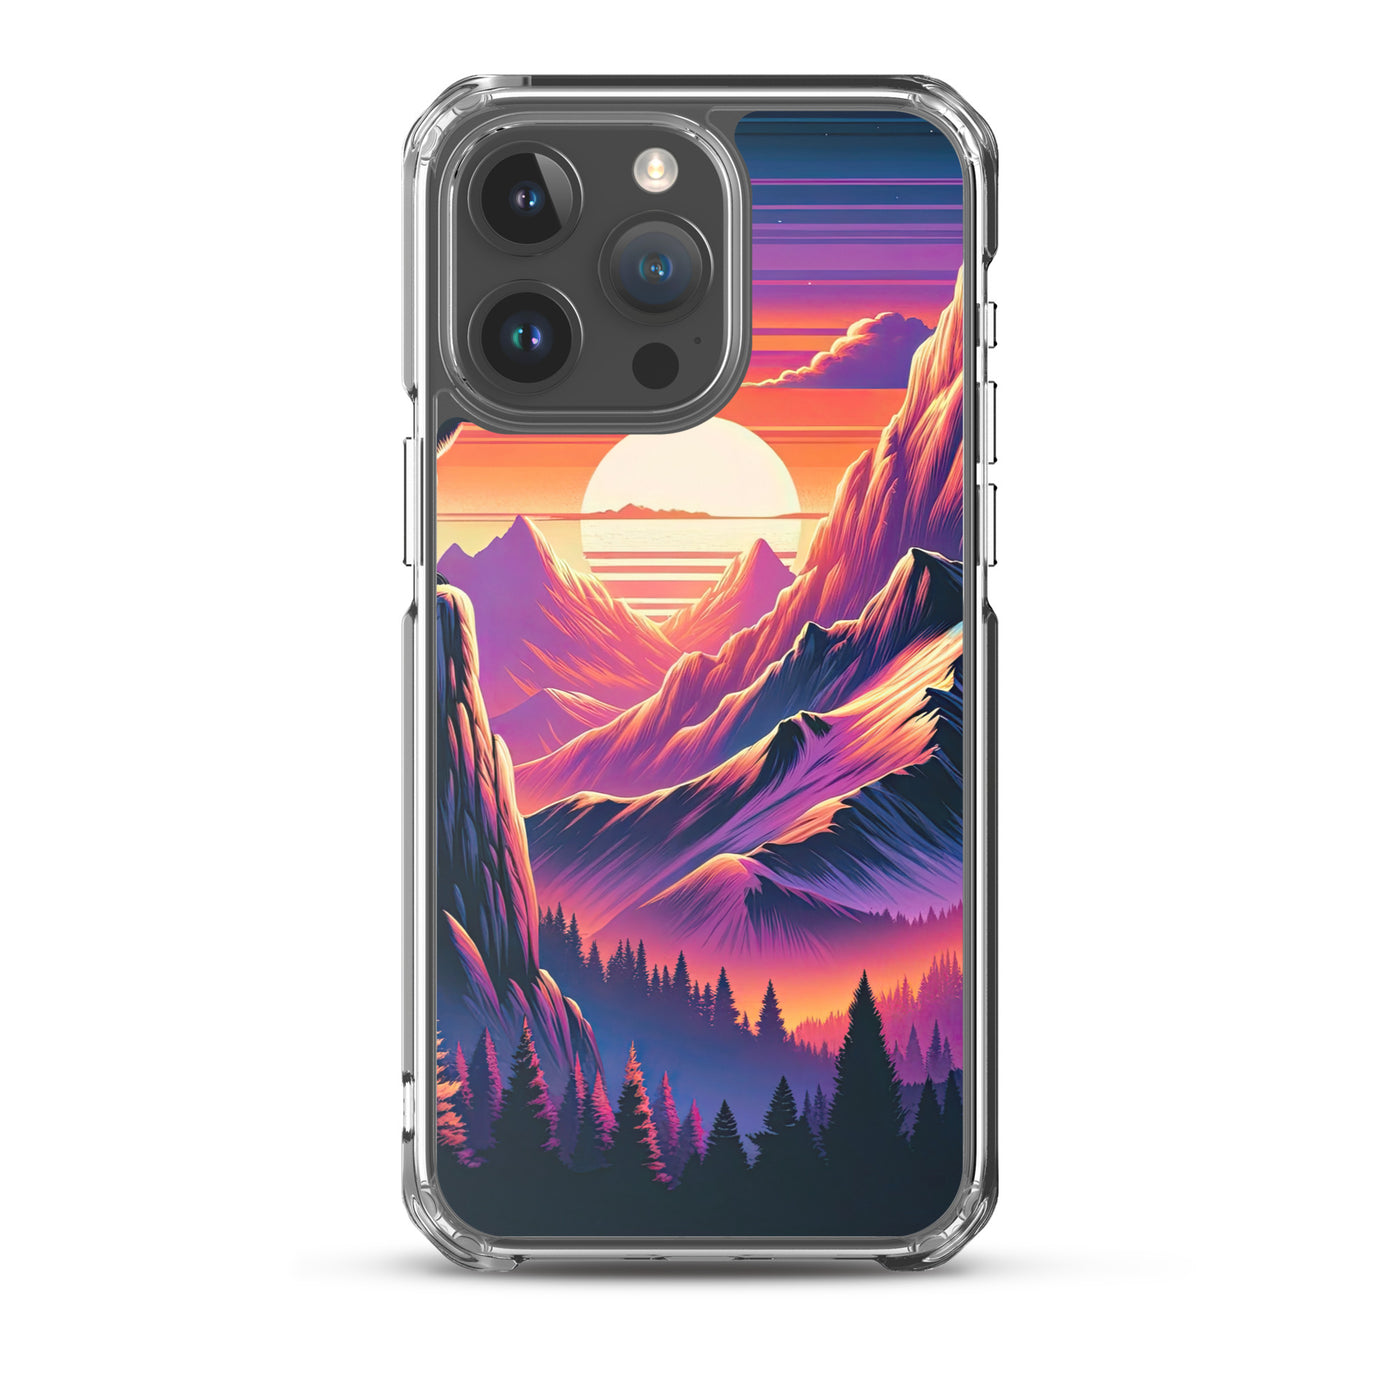 Alpen-Sonnenuntergang mit Bär auf Hügel, warmes Himmelsfarbenspiel - iPhone Schutzhülle (durchsichtig) camping xxx yyy zzz iPhone 15 Pro Max